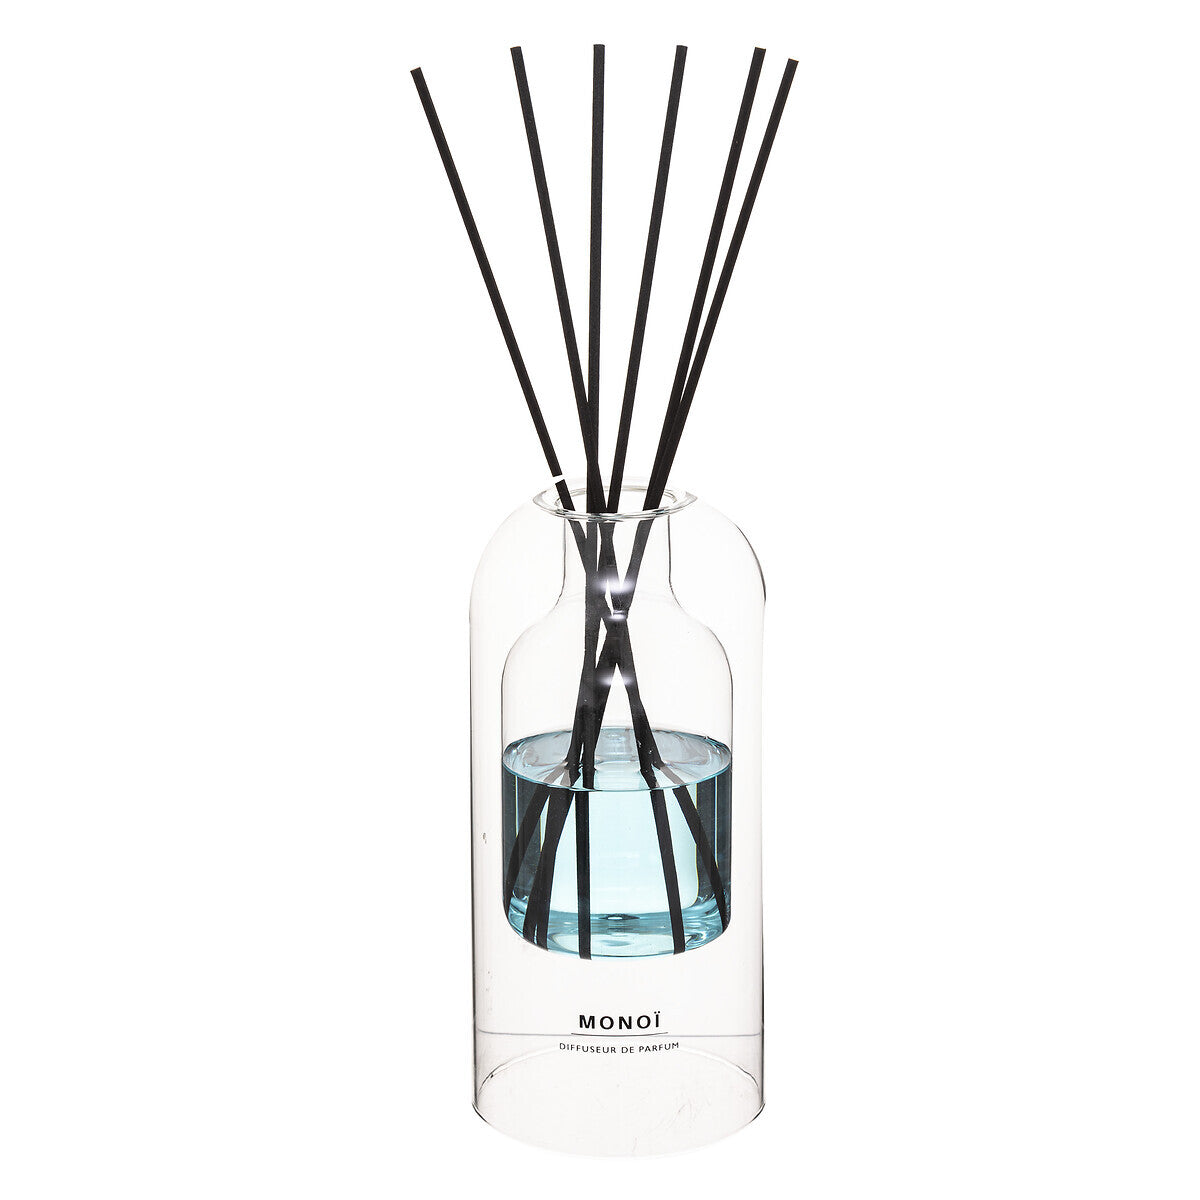 Fragrance stick diffuser with gardenia aroma, 150ml